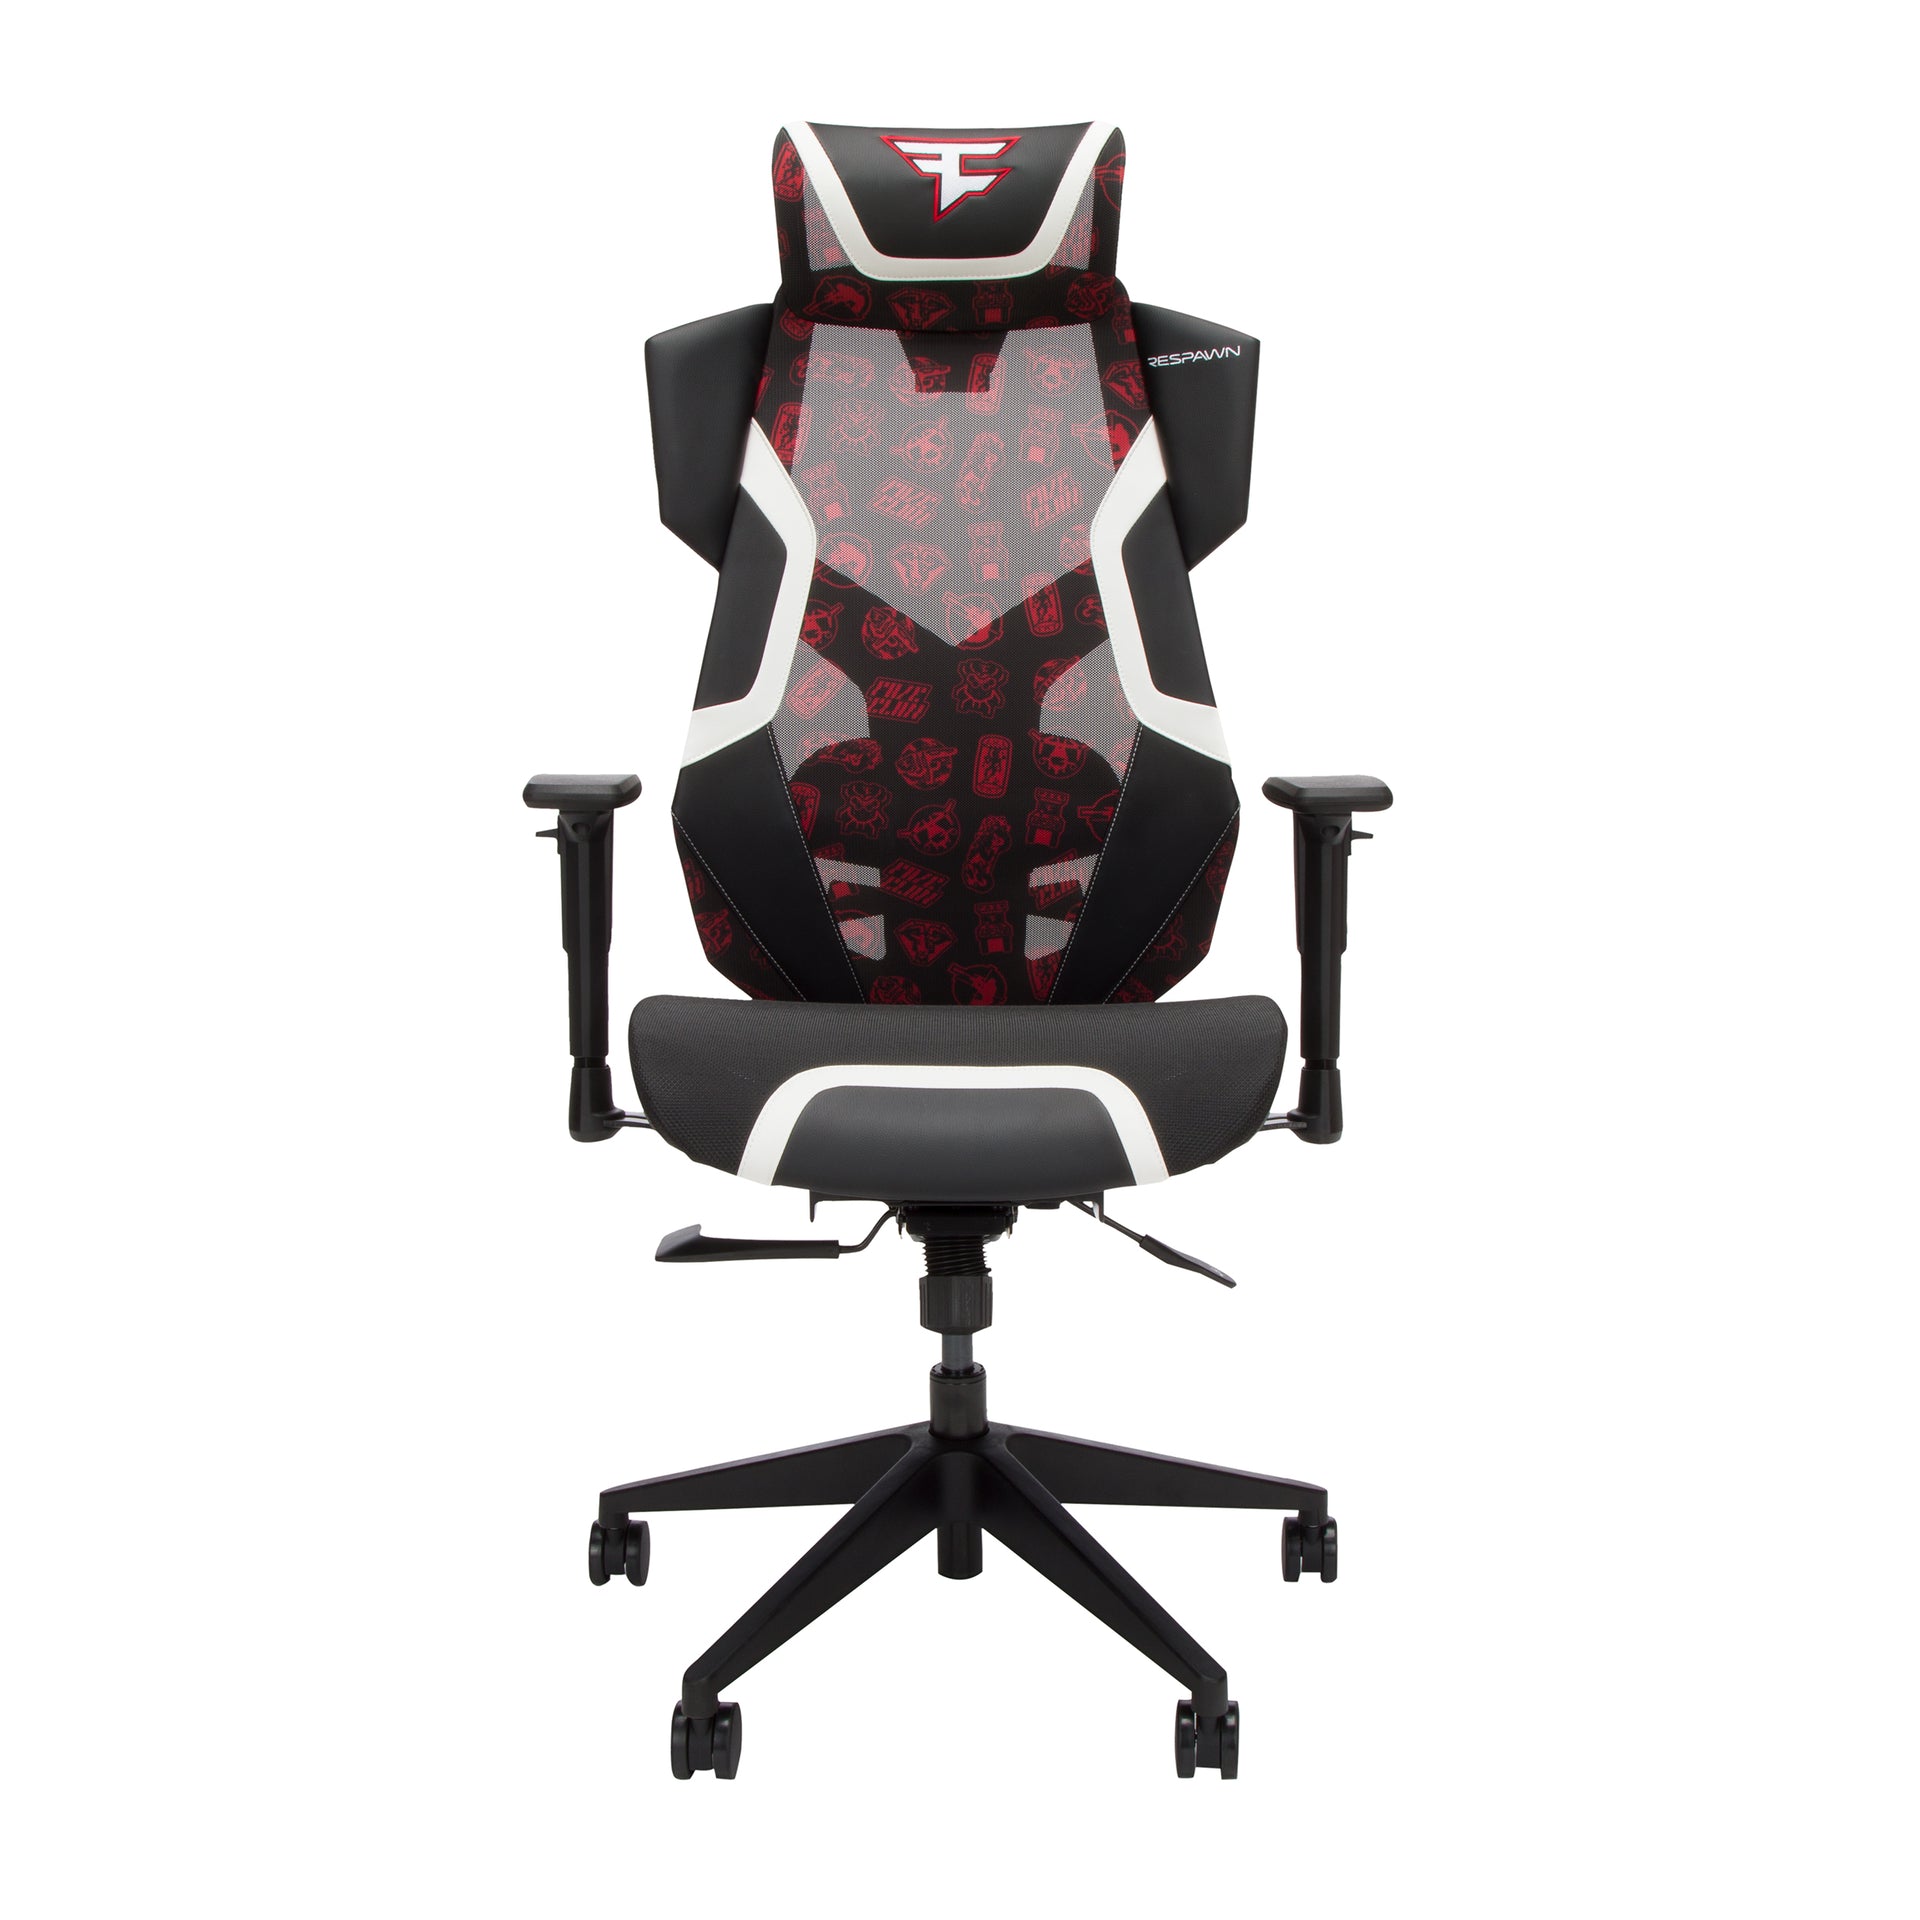 RESPAWN FLEXX Full Mesh Ergonomic Gaming Chair